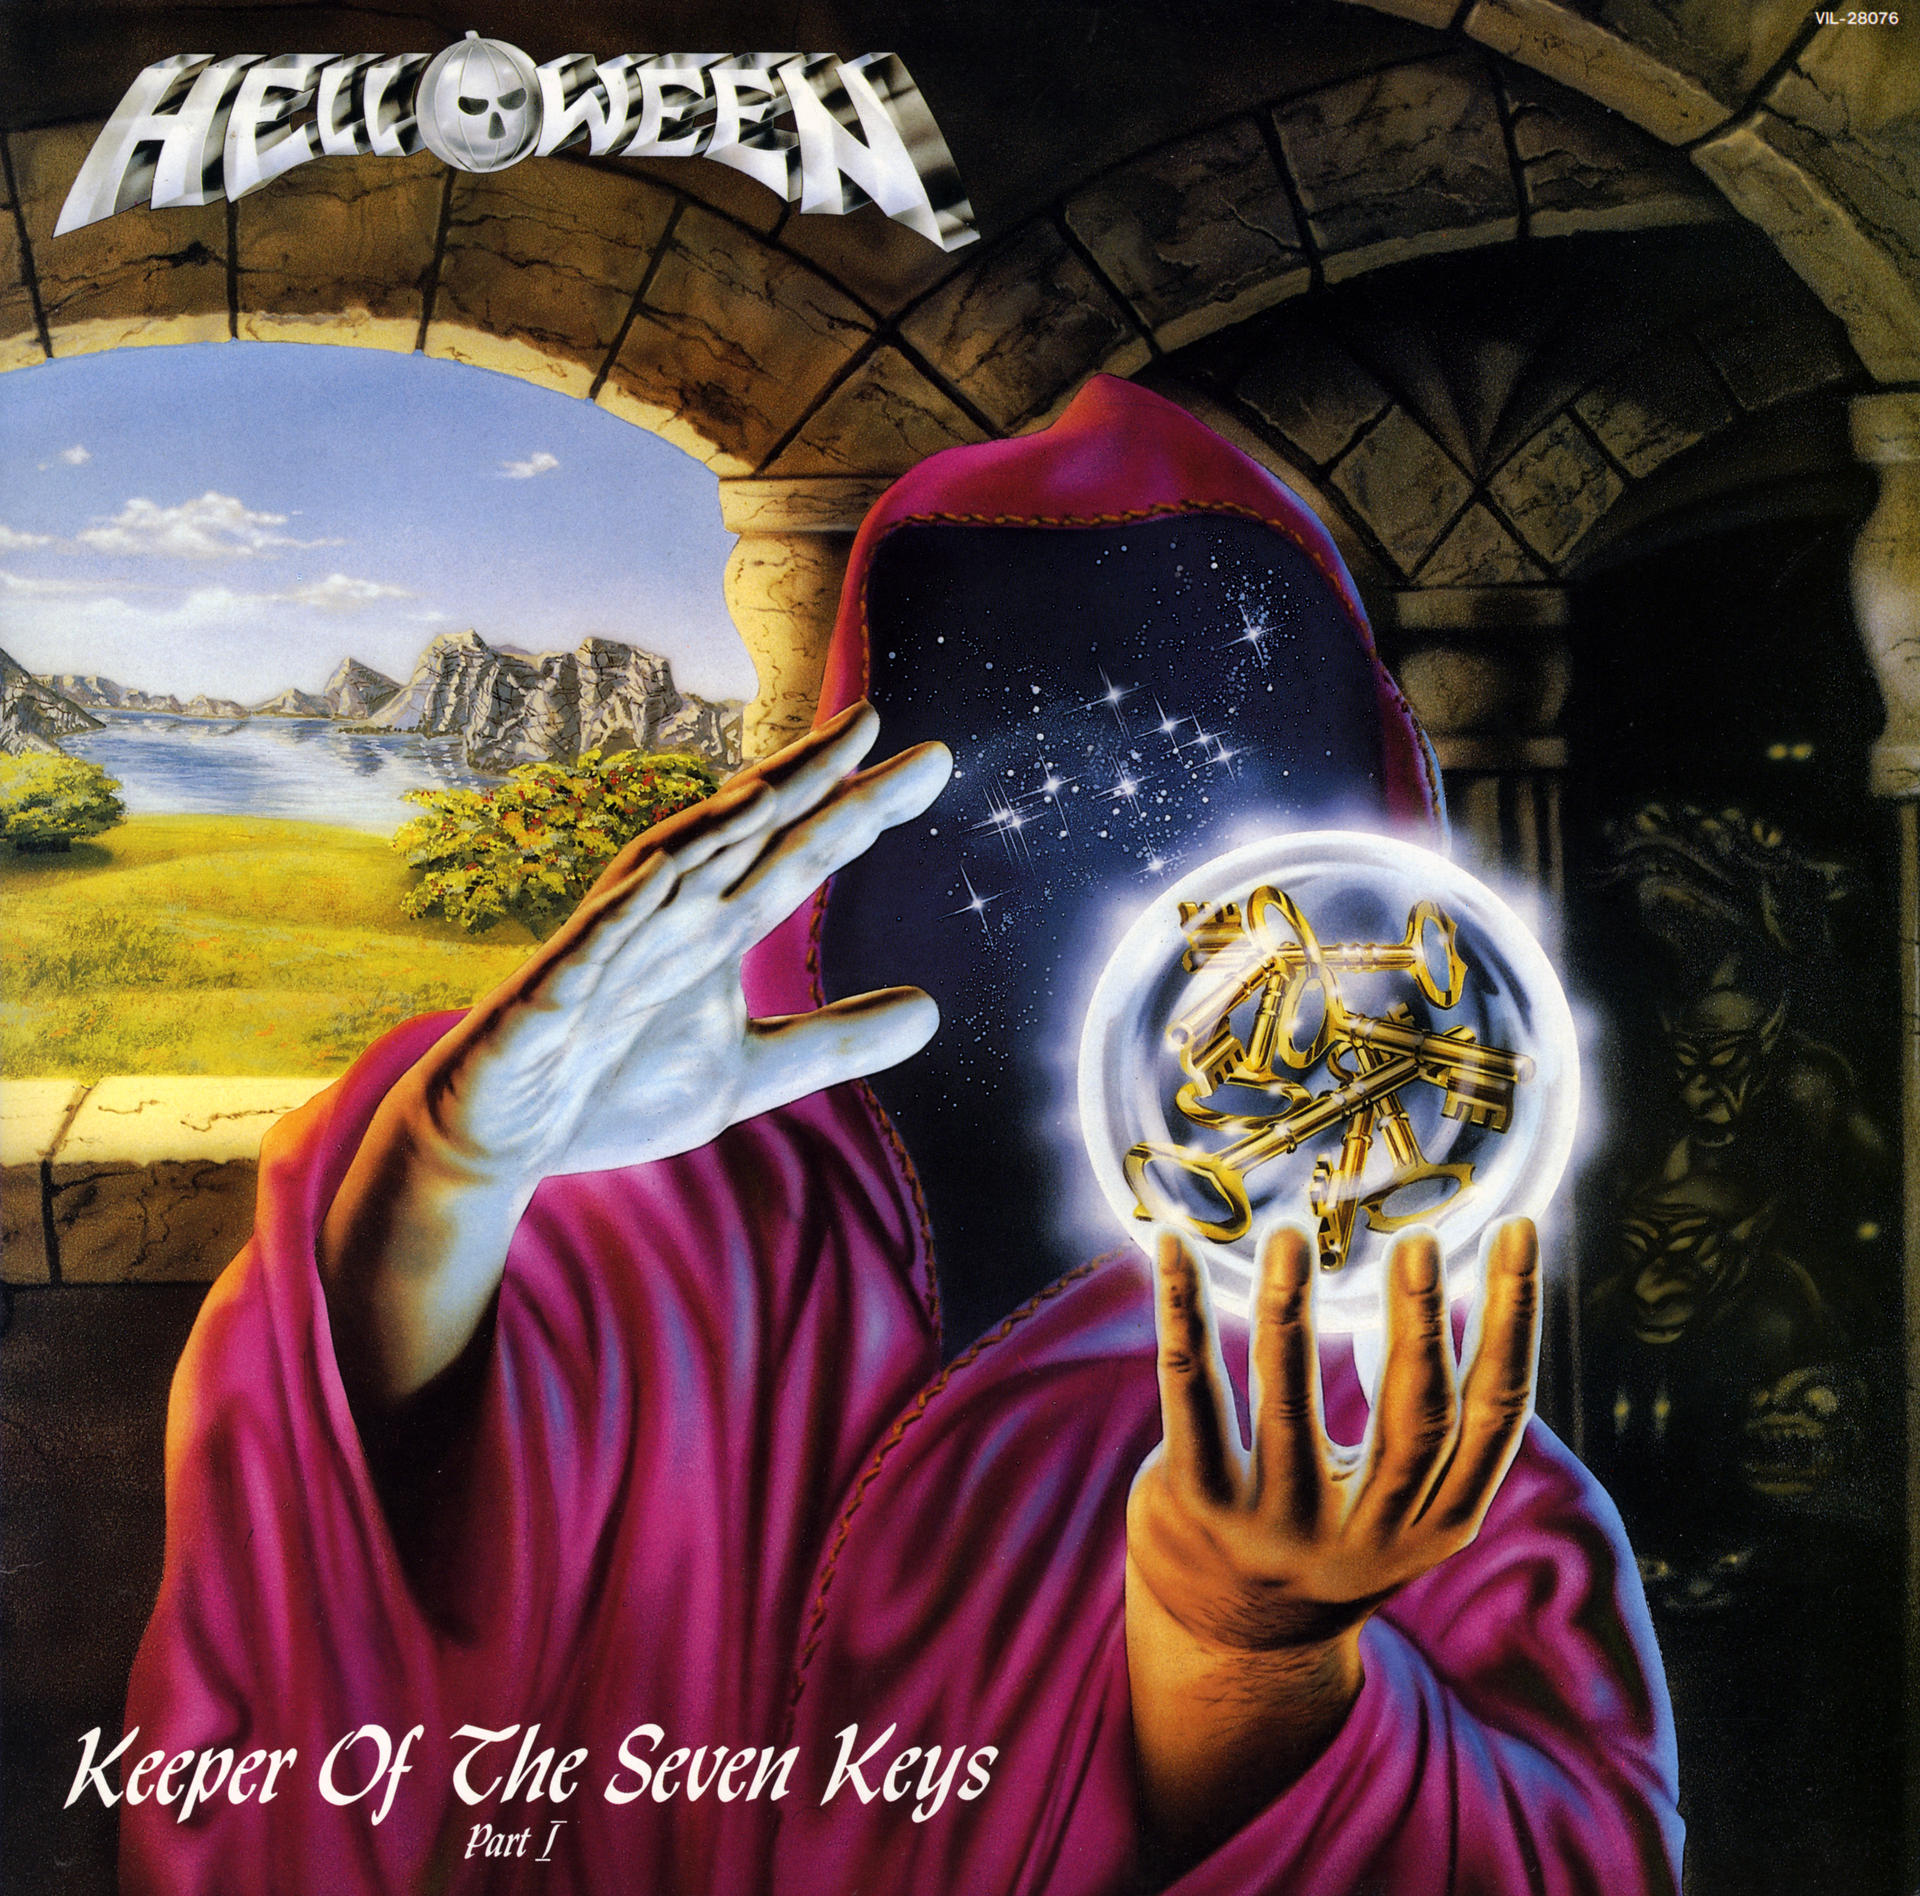 Металл BMG Helloween - Keeper Of The Seven Keys, Part I (Coloured Vinyl LP) поп sony alicia keys alicia